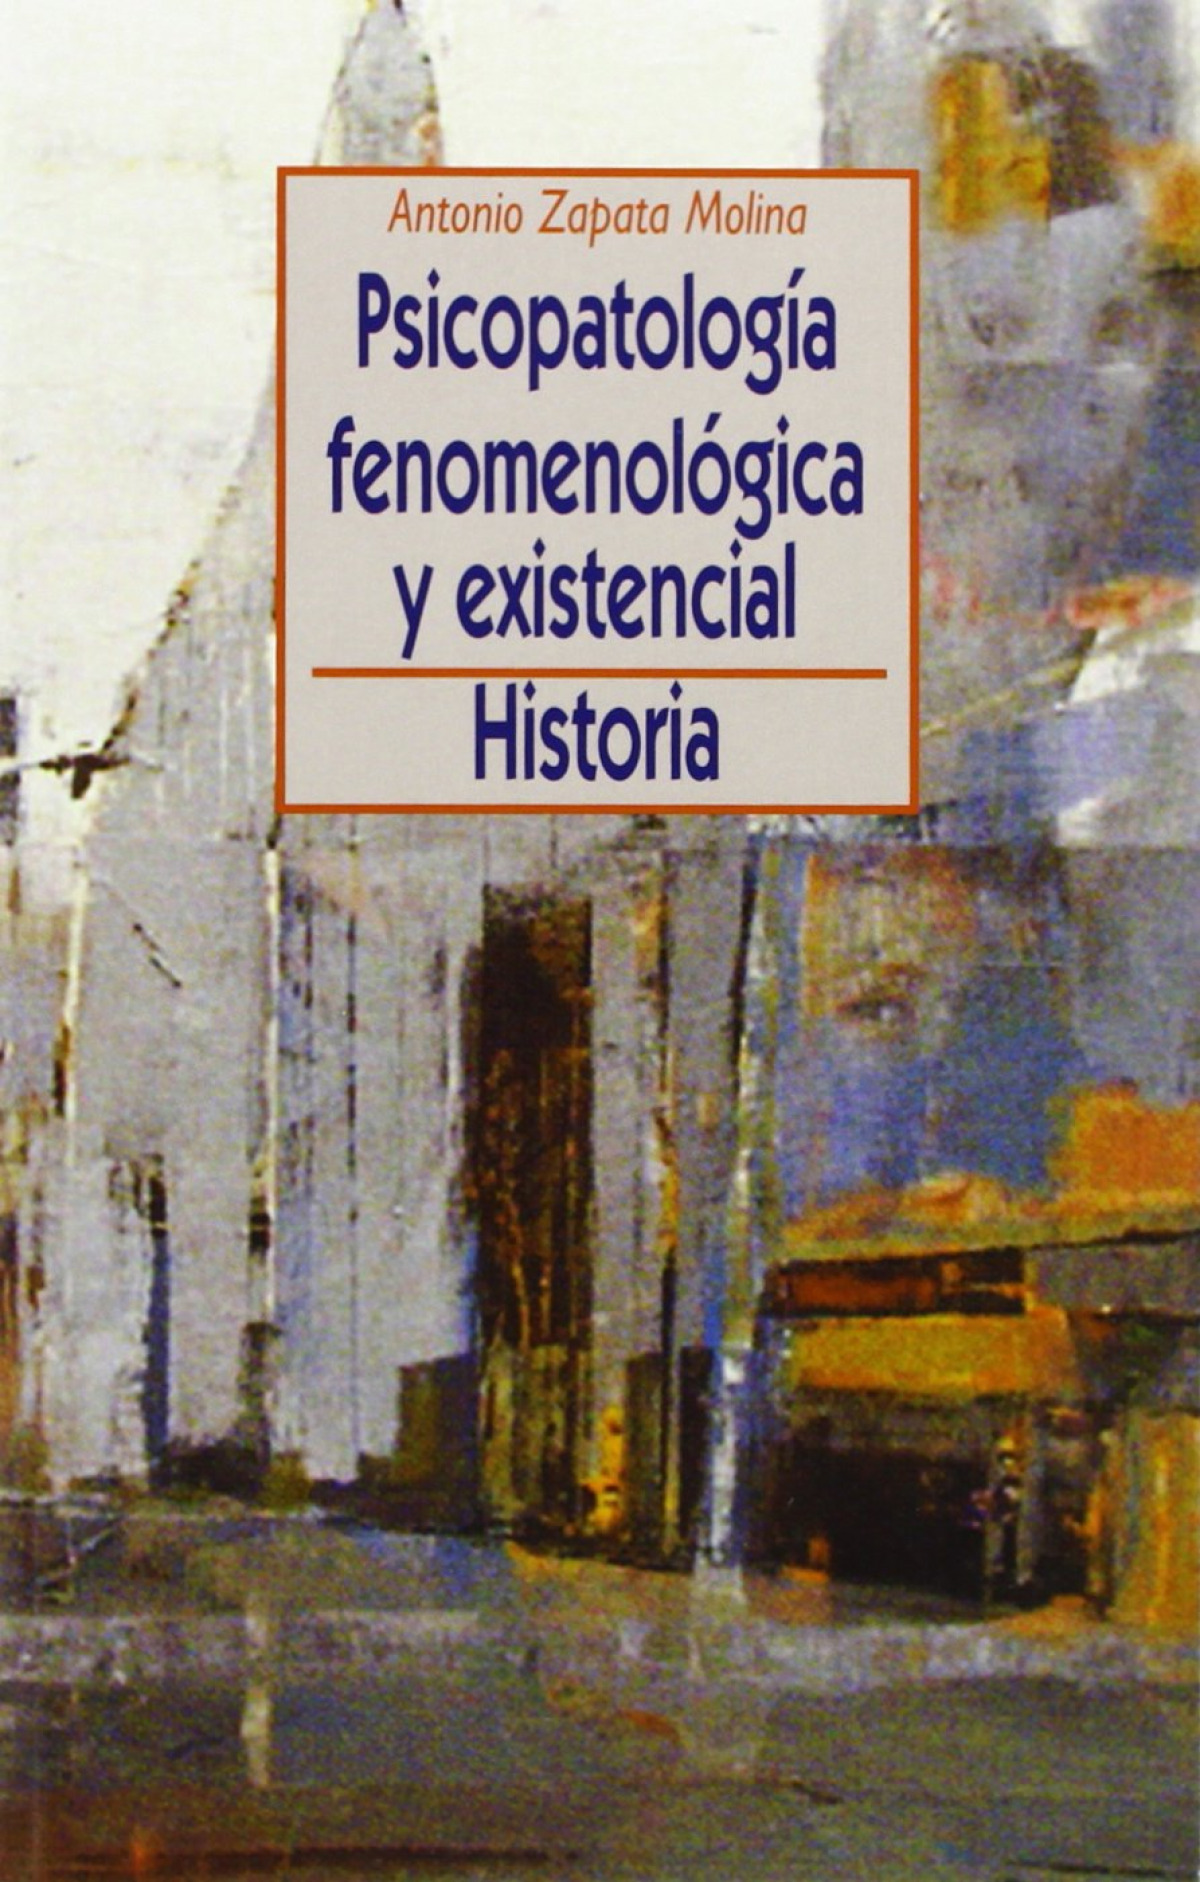 Psicopatologia fenomenologica y existencial: historia - Zapata Molina,Antonio